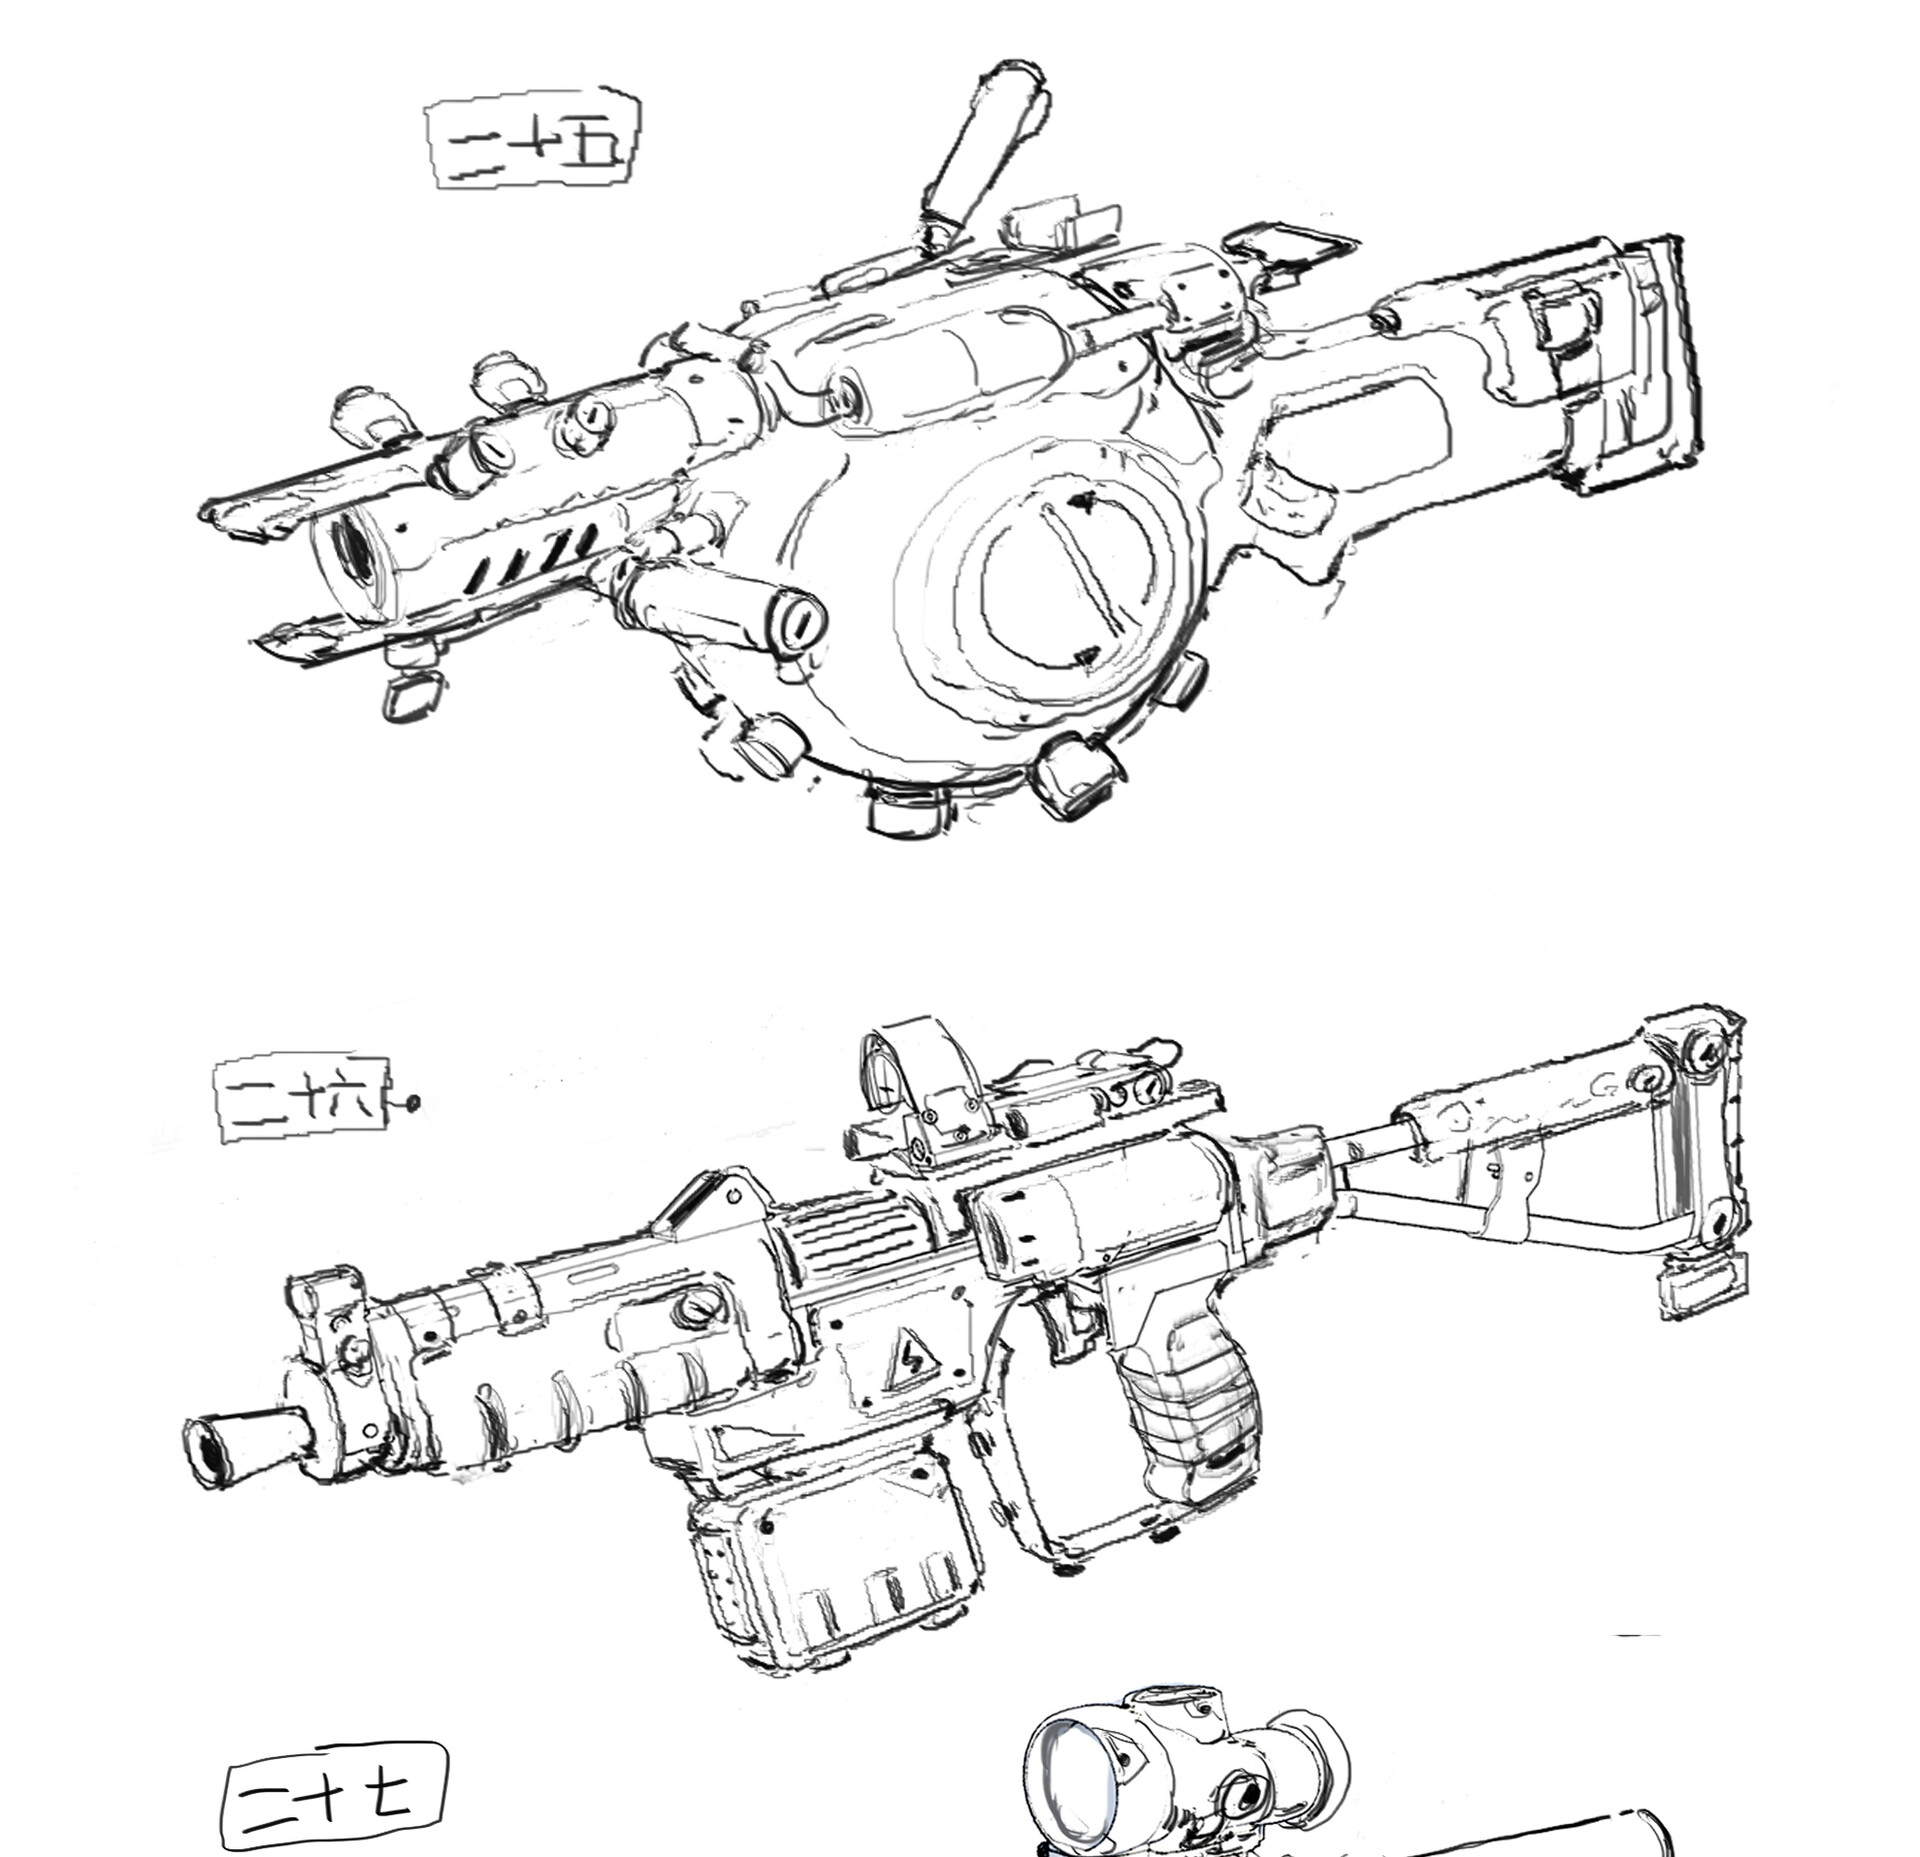 ArtStation - Cartoon gun sketch exercise